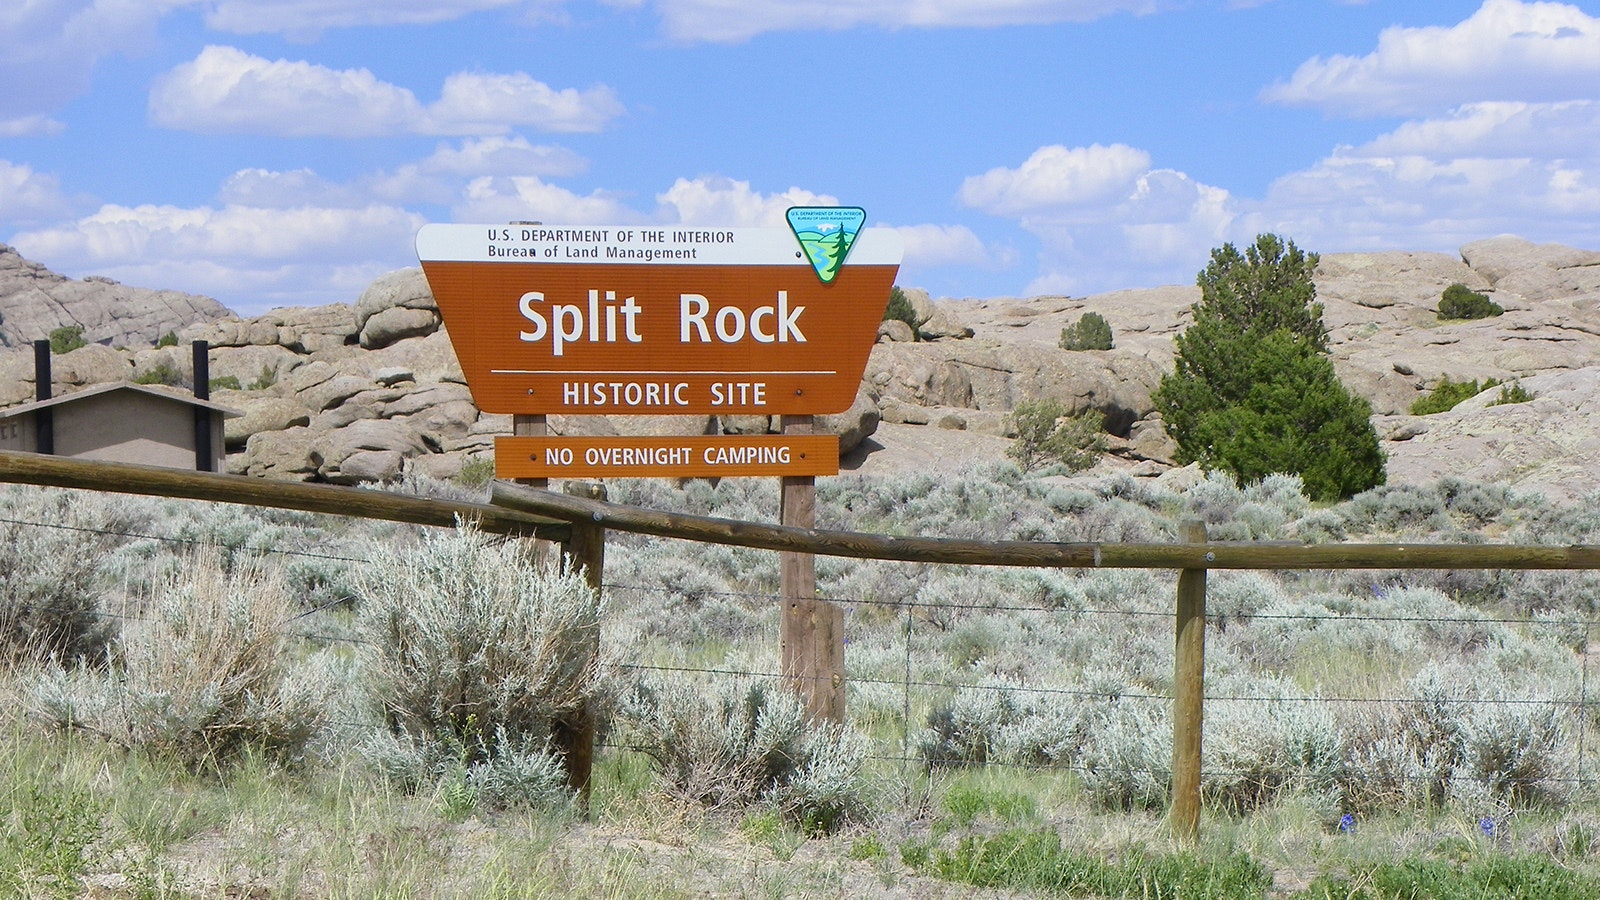 Split Rock was an important landmark along the Oregon, Mormon and California trails with its distinctive "split" that resembles a gunsight.